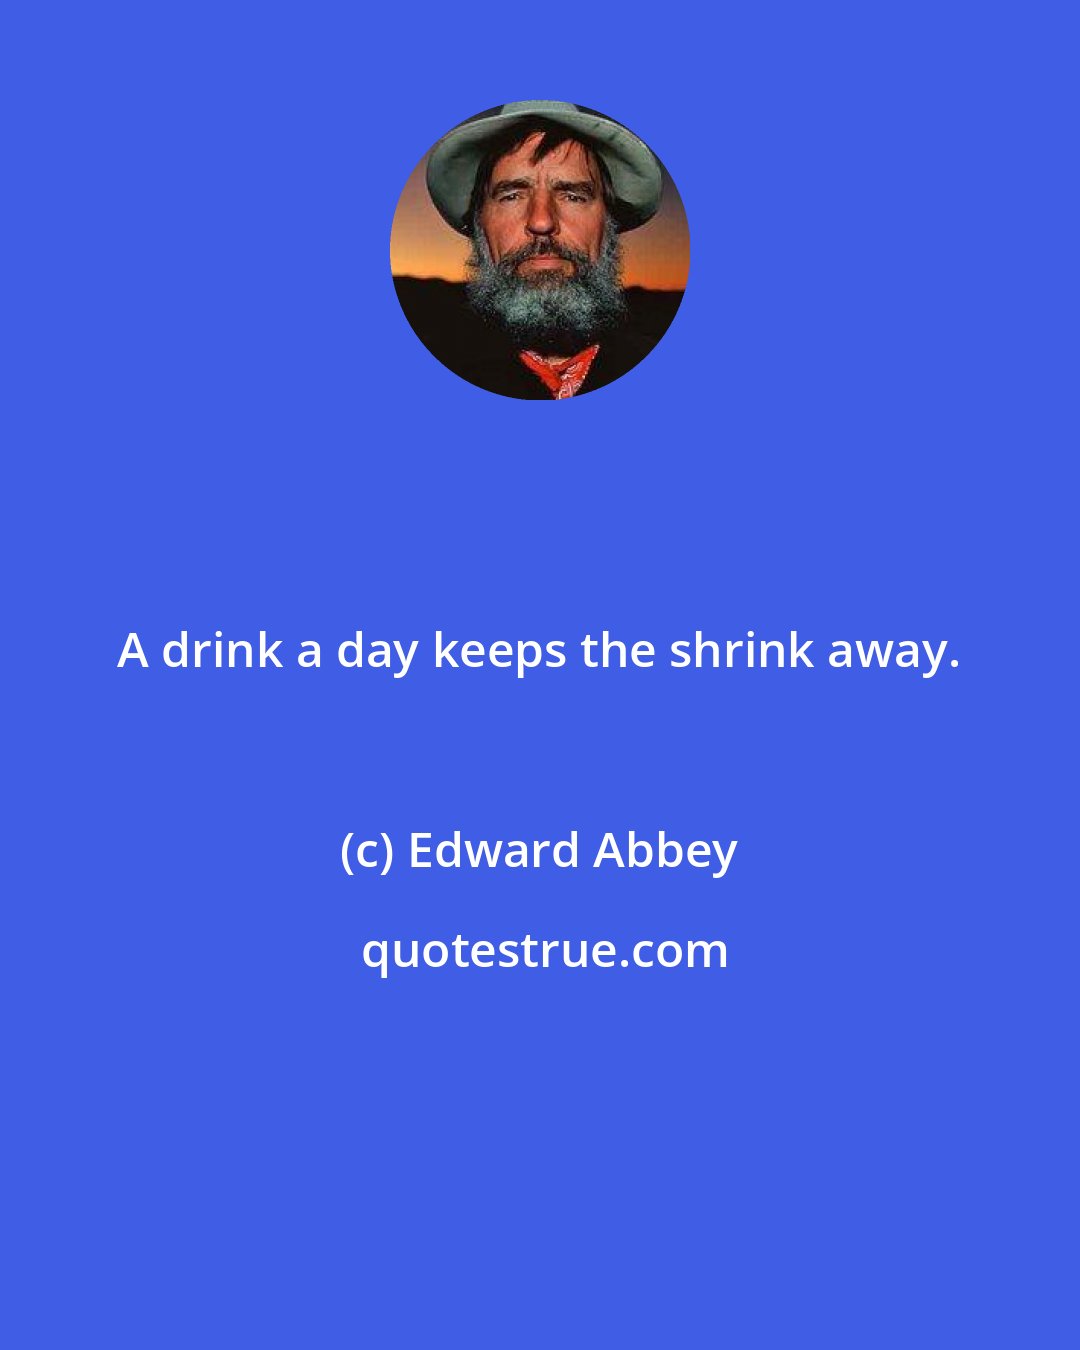 Edward Abbey: A drink a day keeps the shrink away.